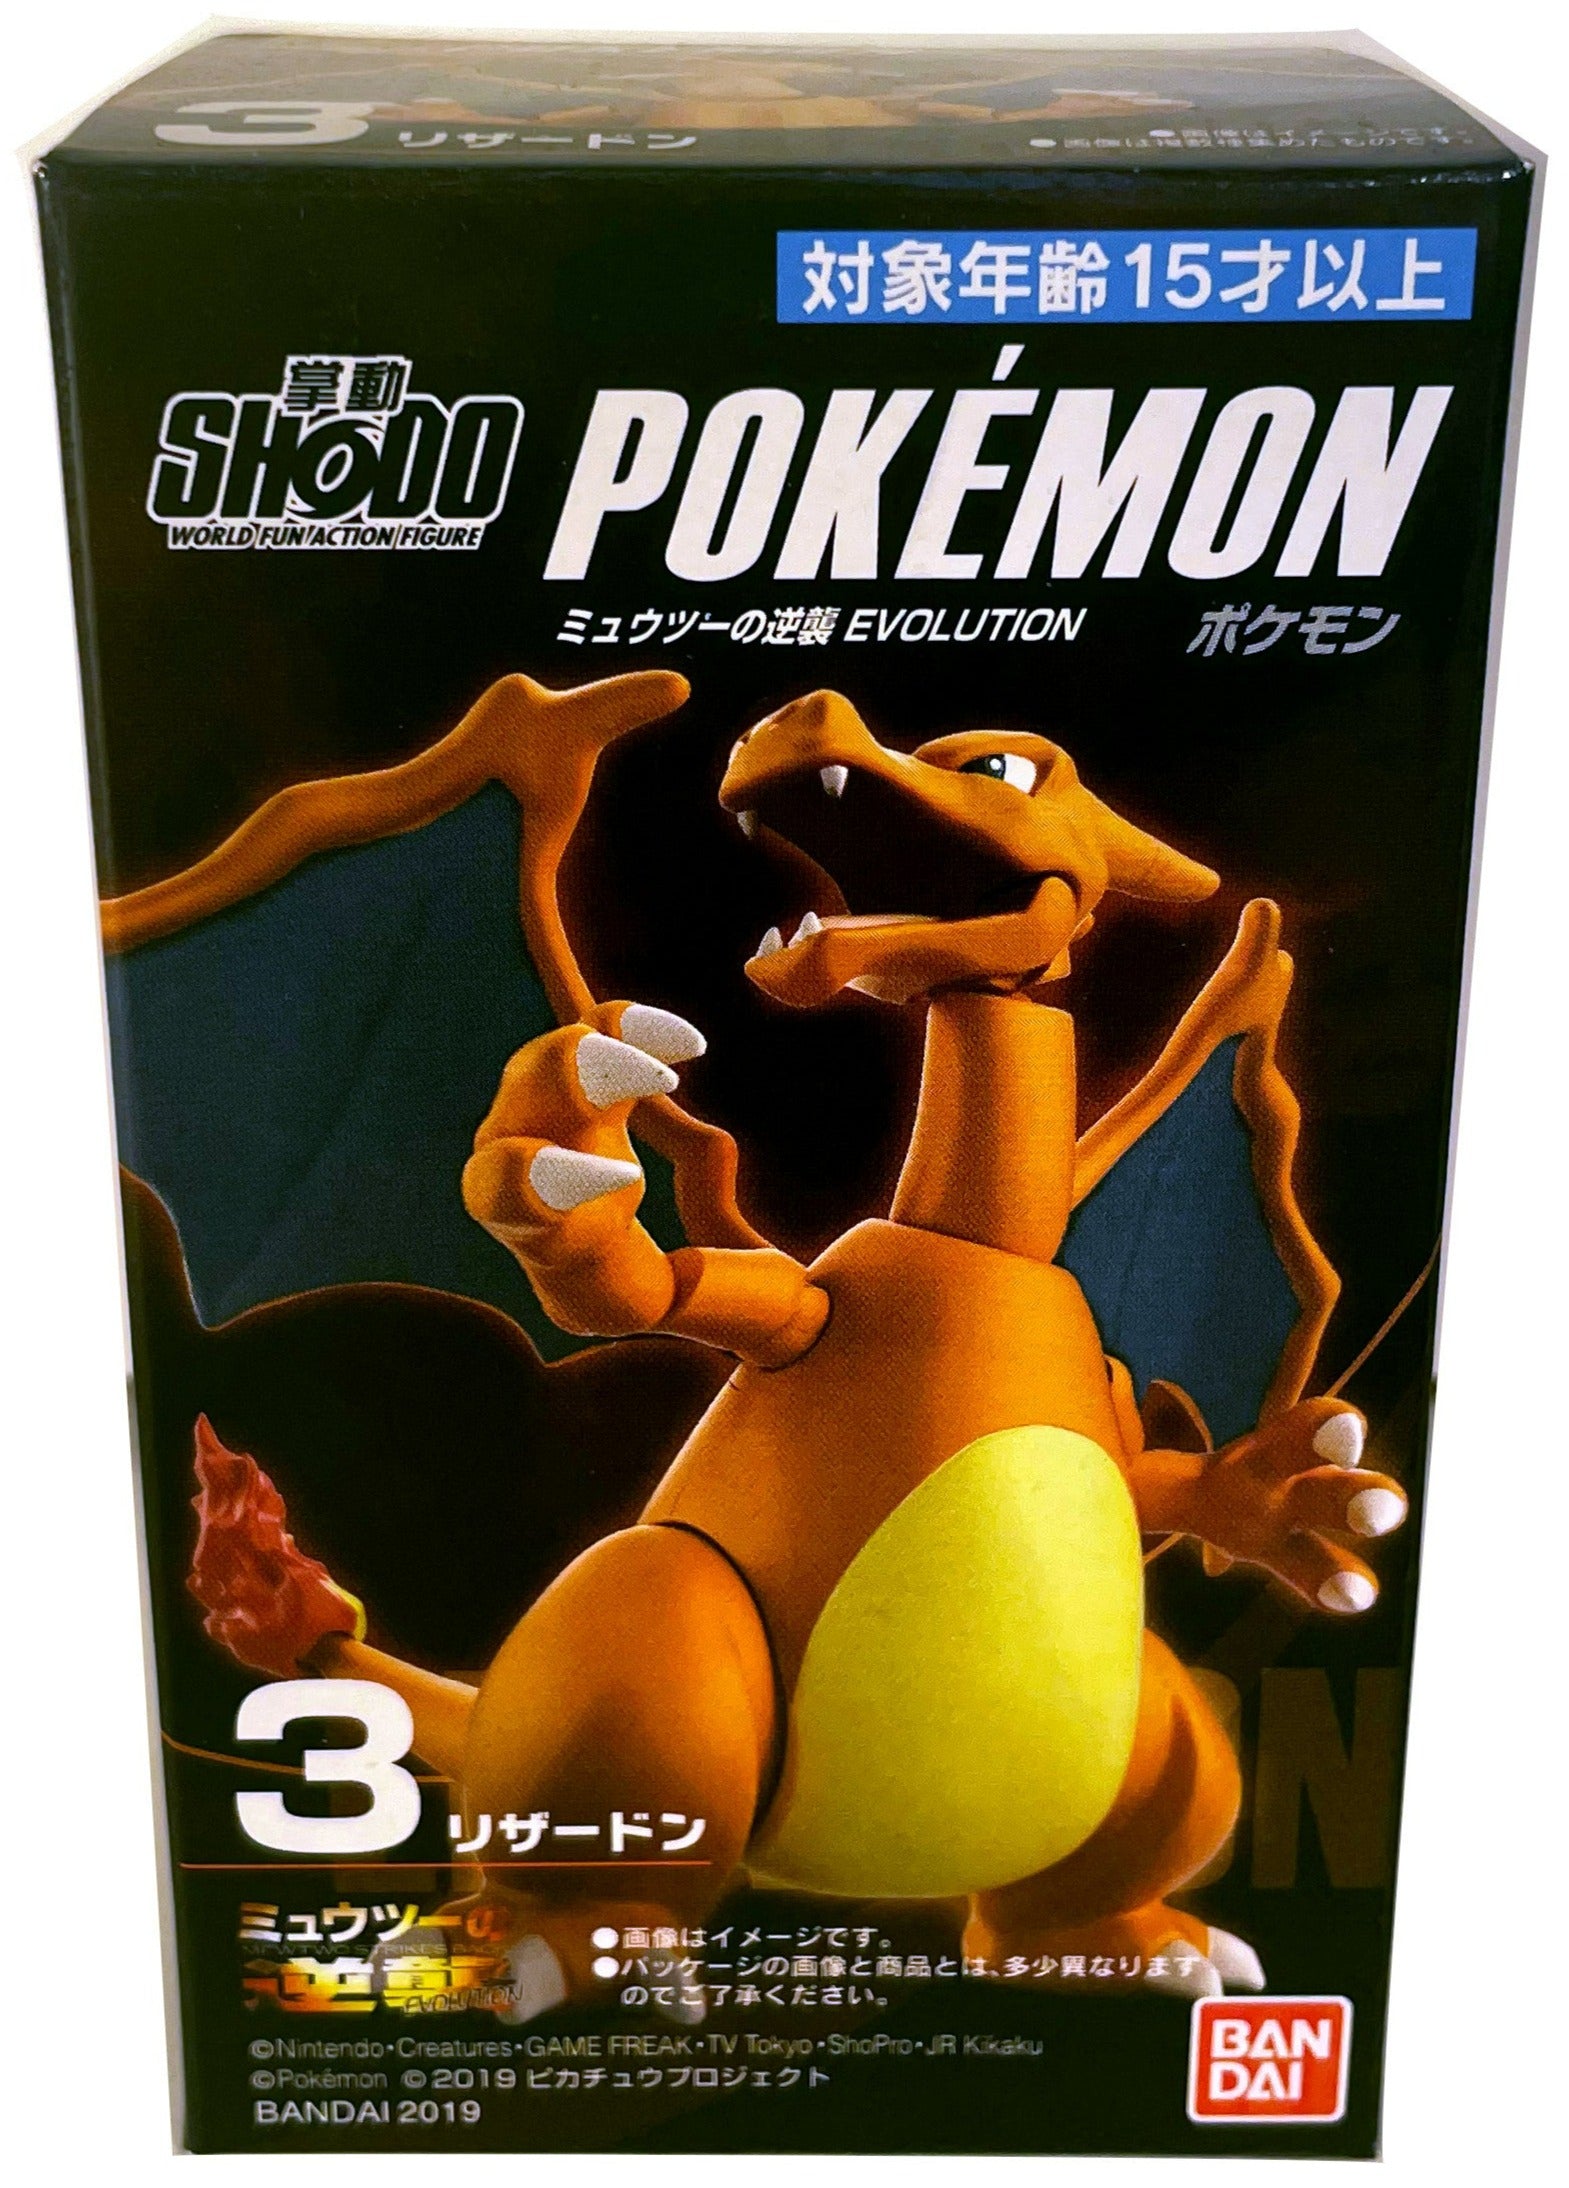 Pokemon Shodo - Kit Mew, Mewtwo e Charizard - Bandai em Promoção